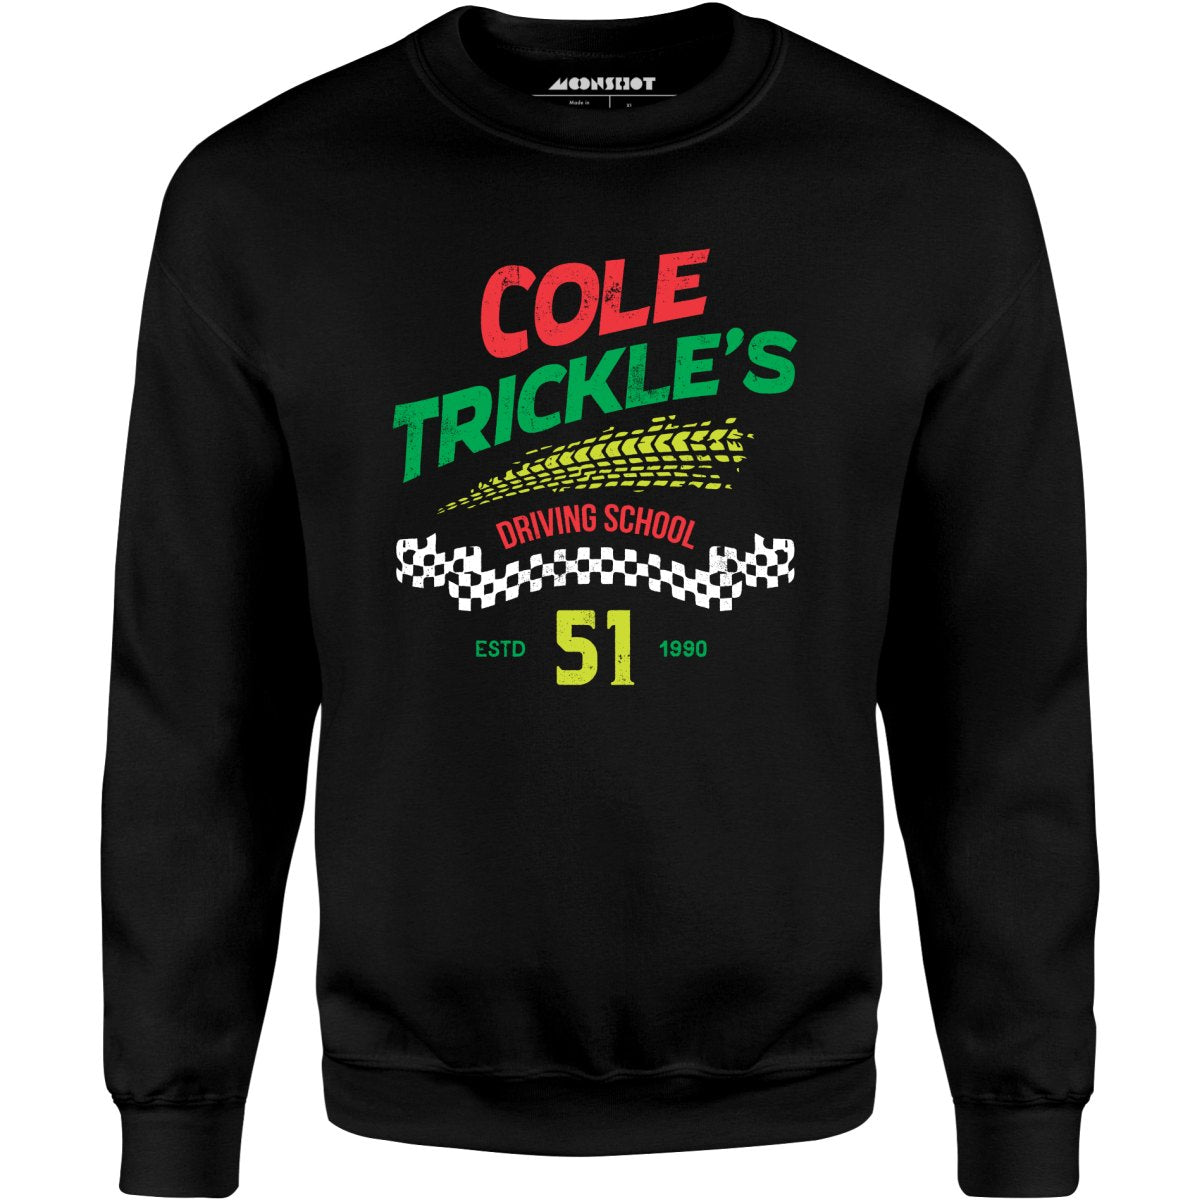 Cole Trickle's Driving School - Unisex Sweatshirt